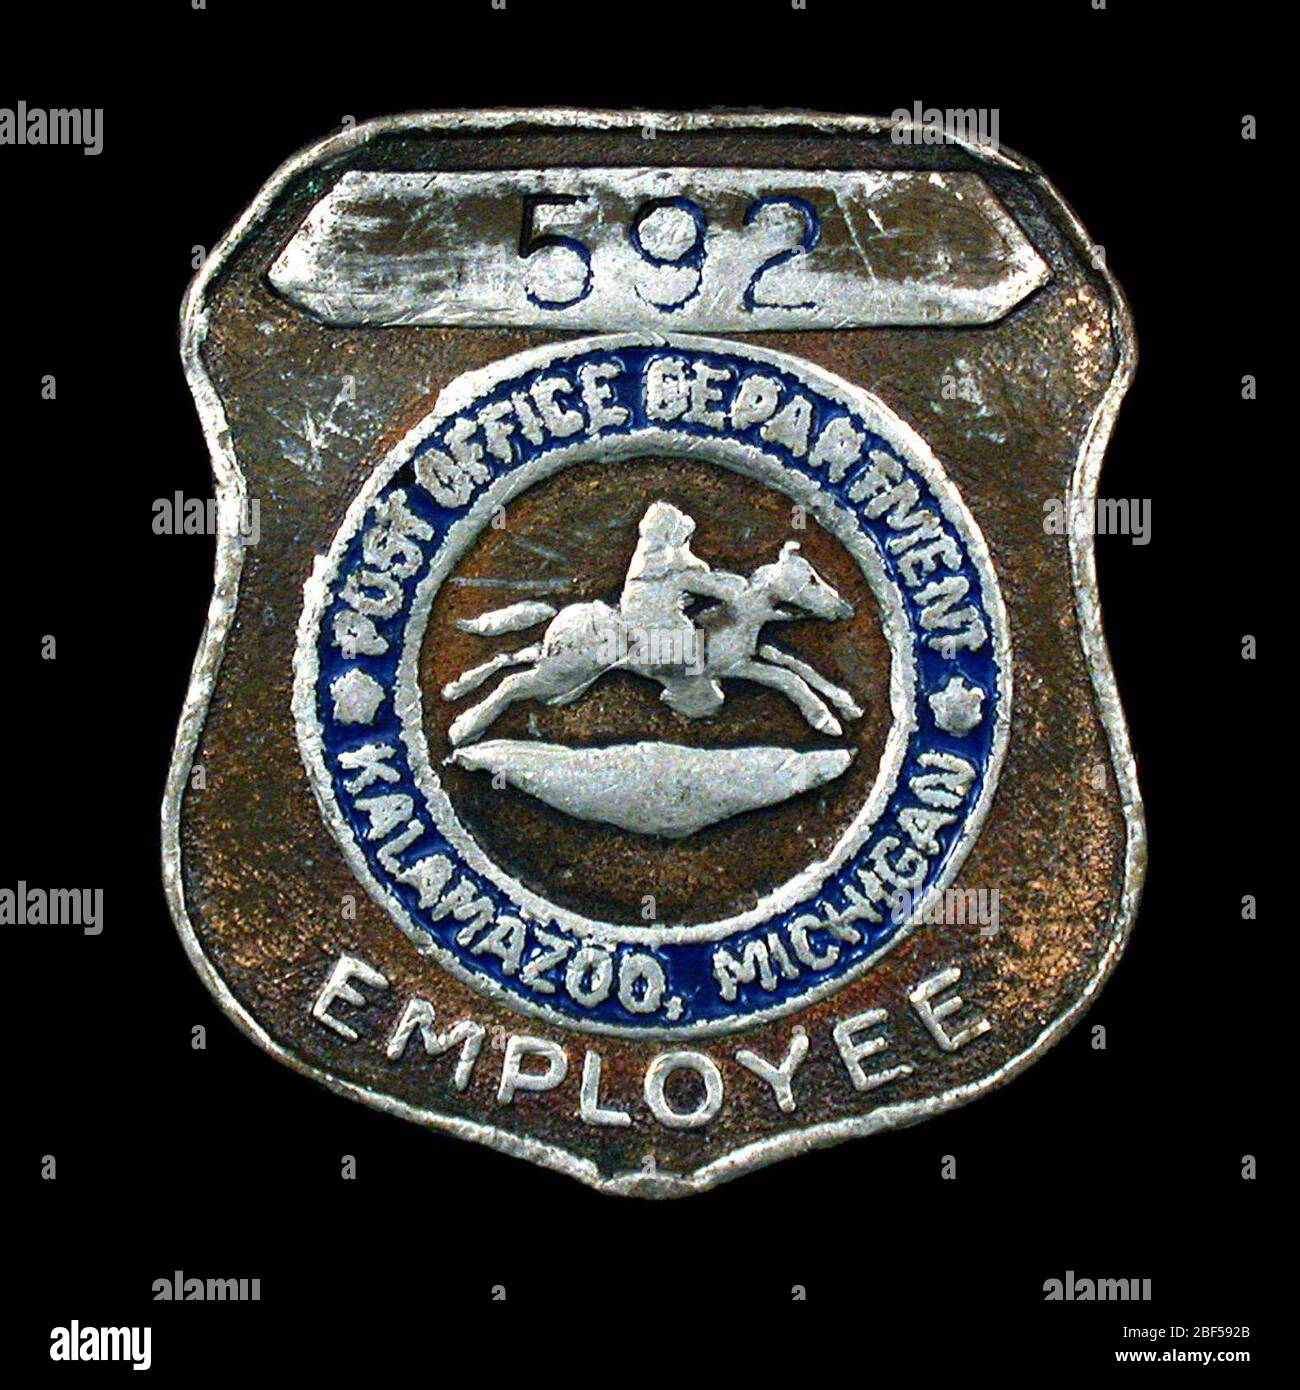 Leather Back Belt Clip US New York Police Badge Holder Necklace Chaining